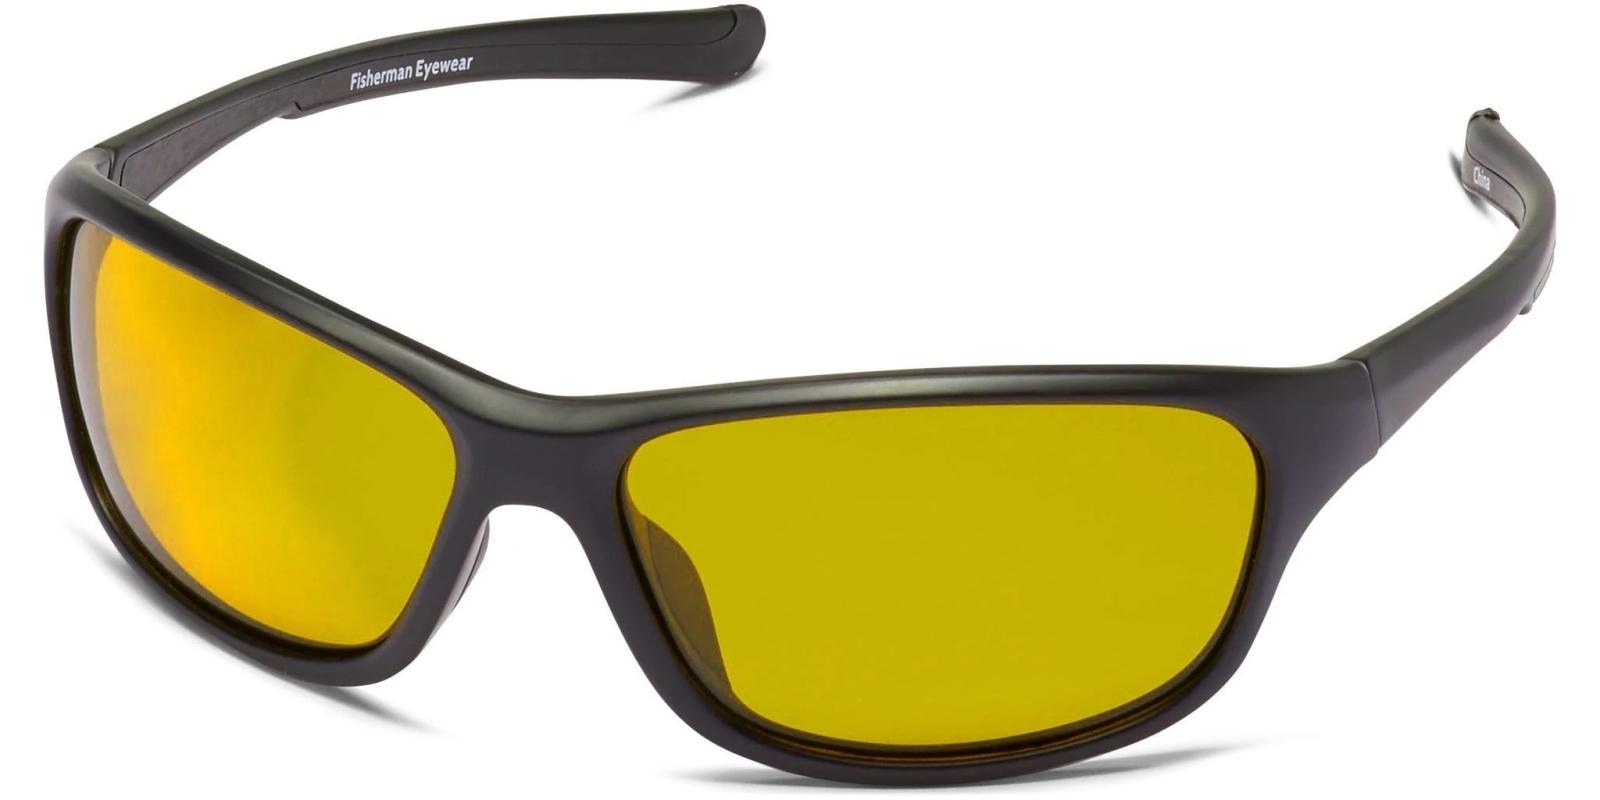 icu Eyewear Cruiser Sunglasses